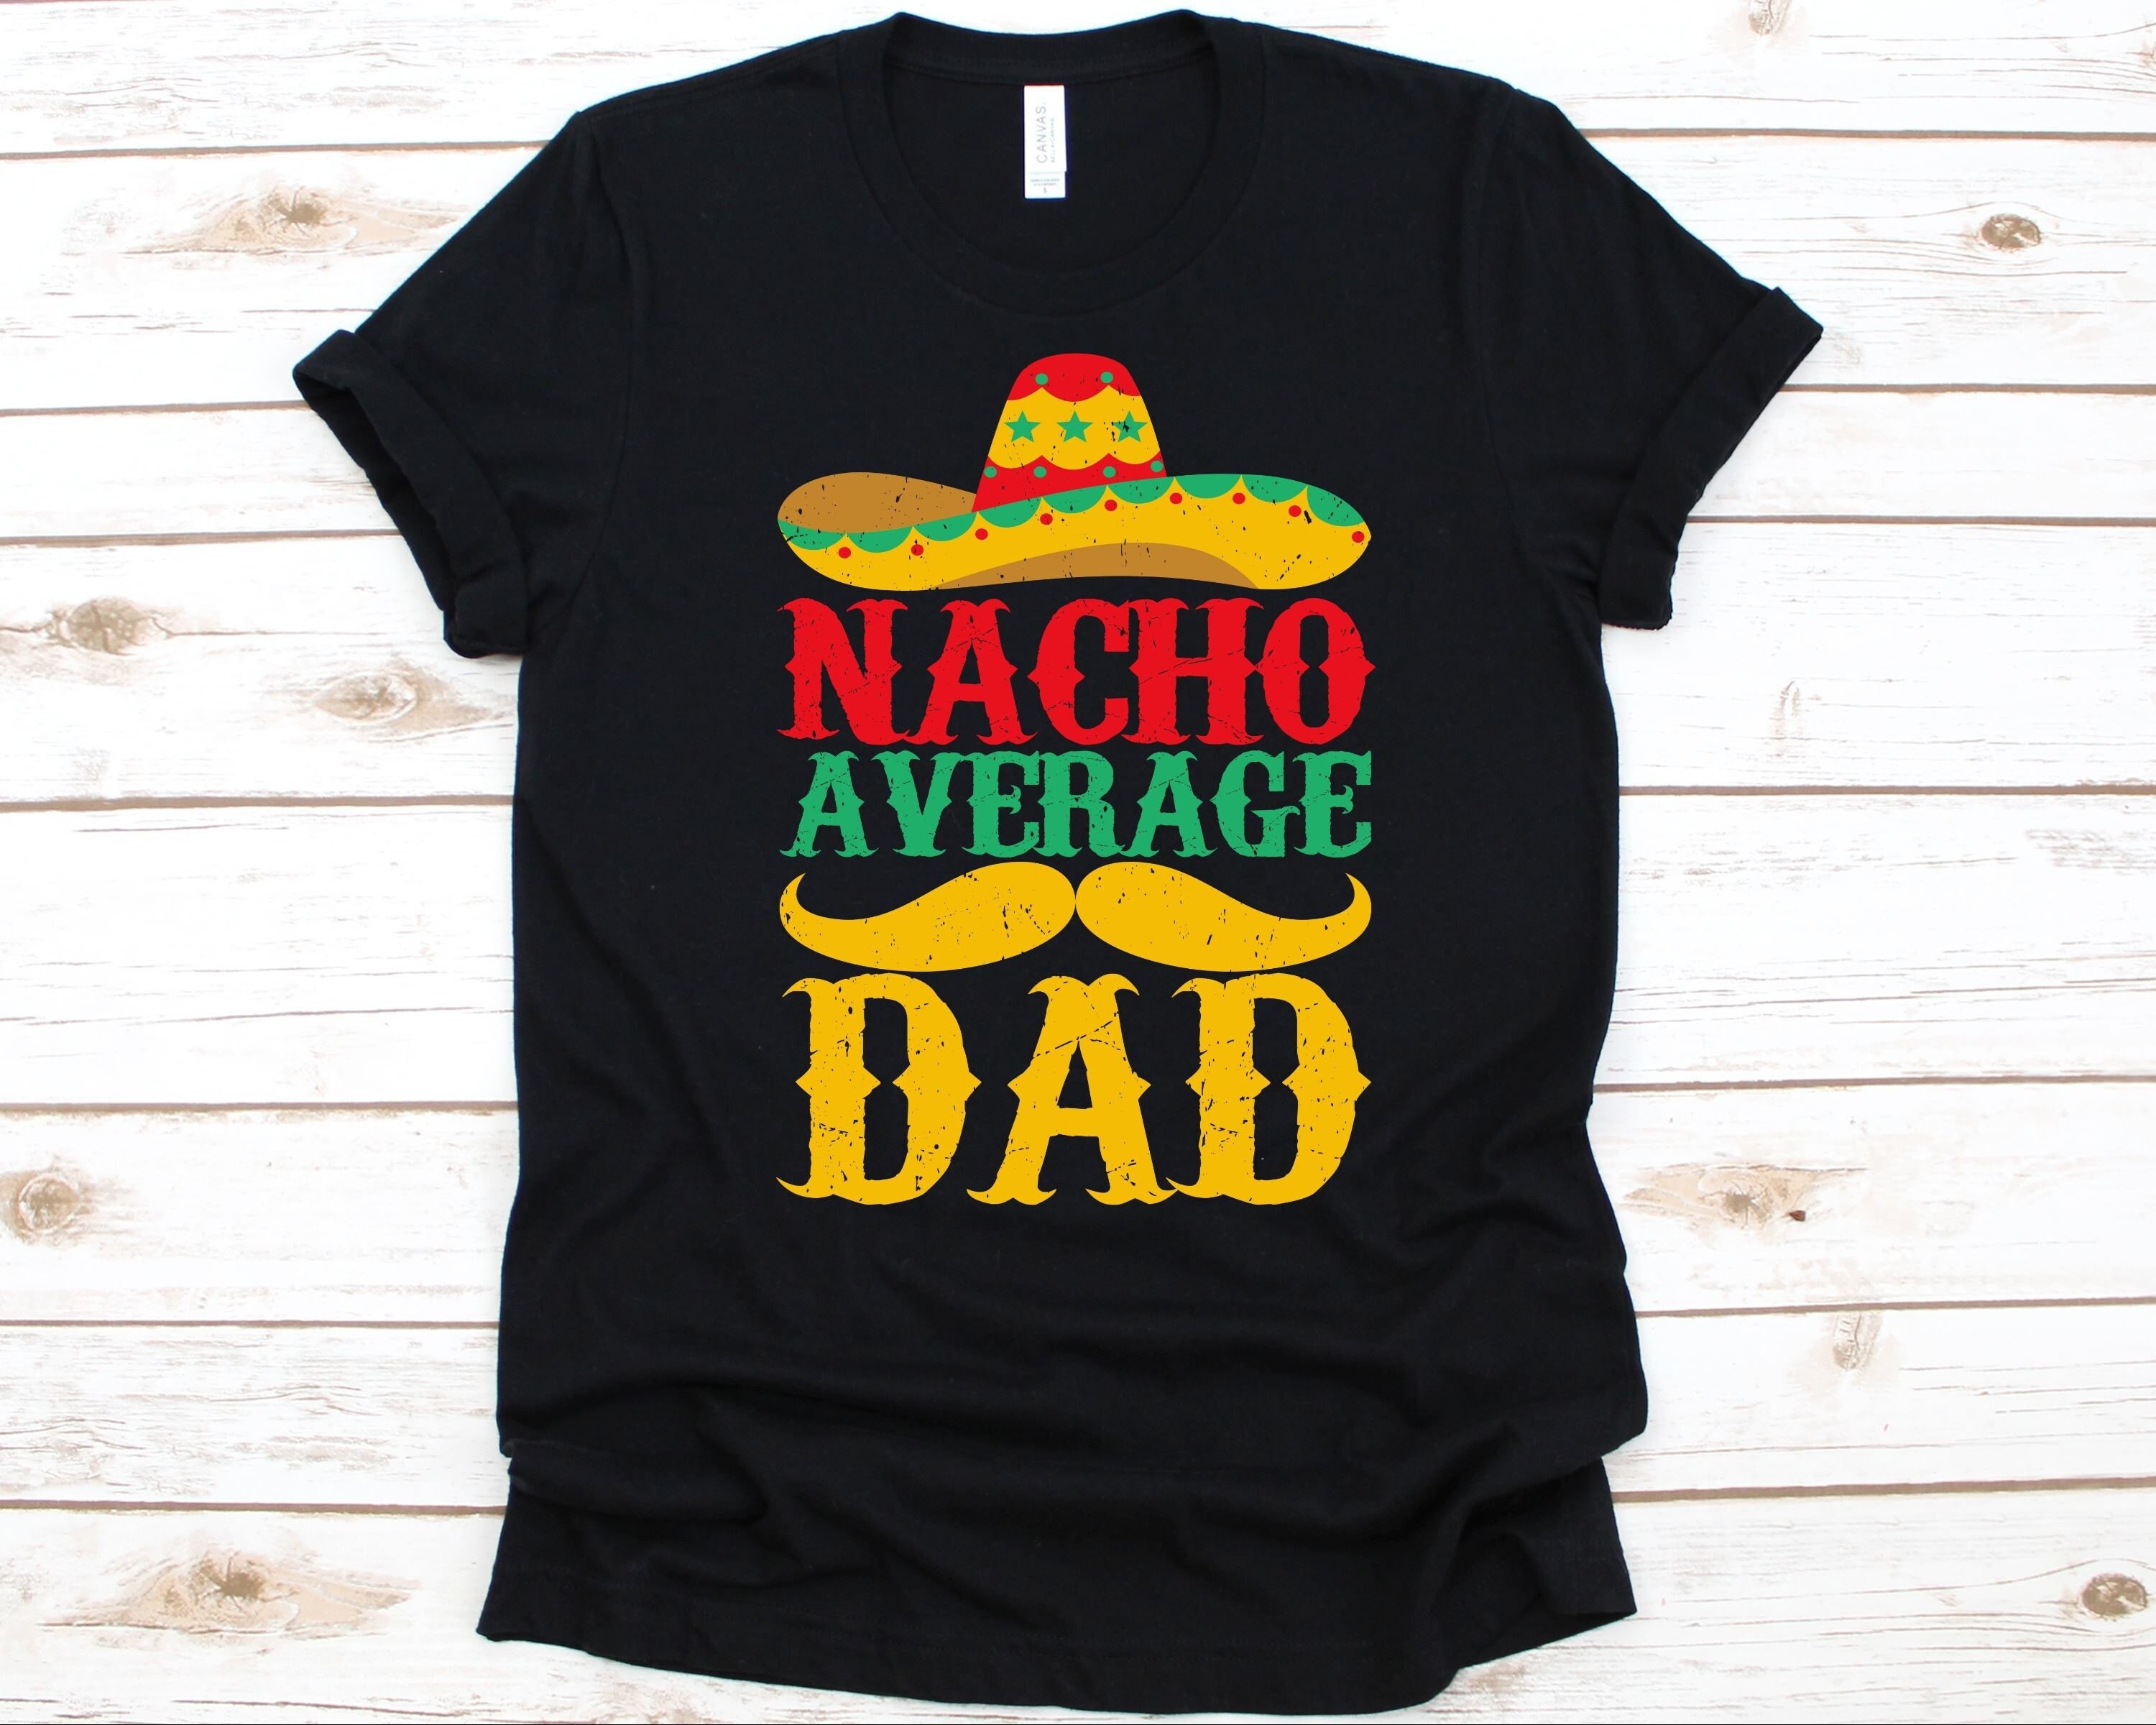 17. Nacho Average Dad Shirt